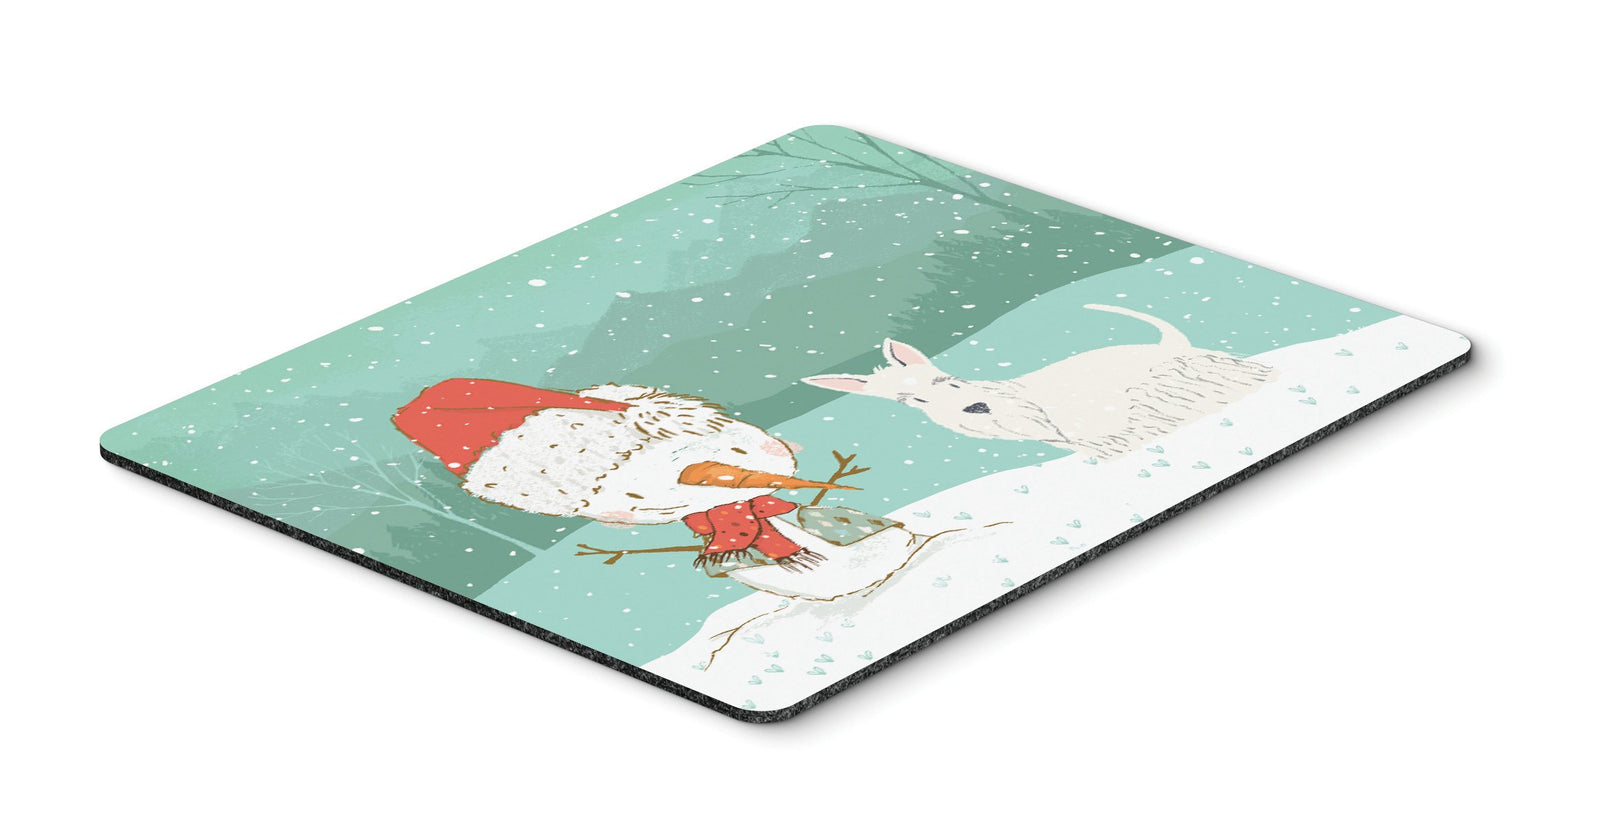 Wheaten Scottish Terrier Snowman Christmas Mouse Pad, Hot Pad or Trivet CK2069MP by Caroline's Treasures